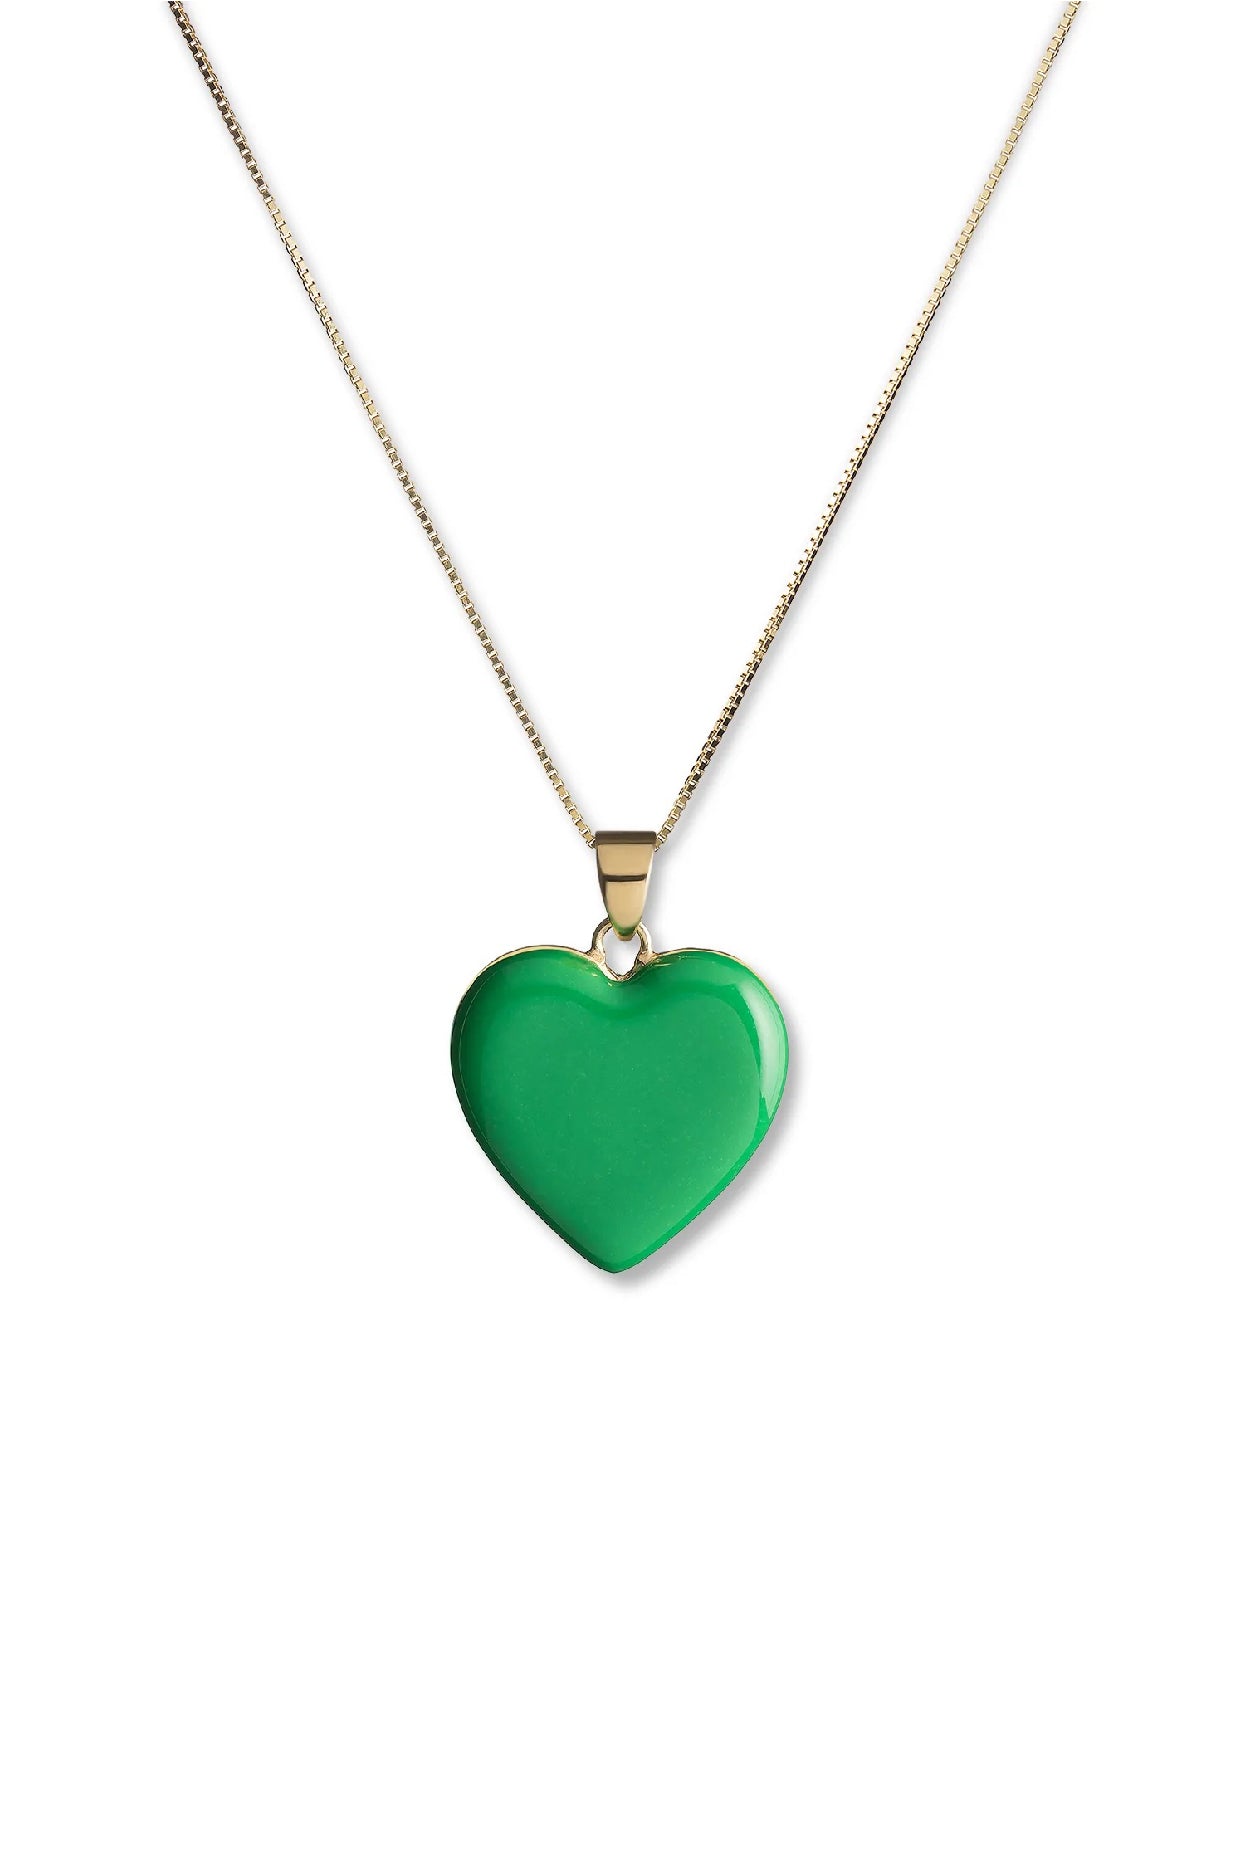 Green Enamel Heart Pendant With Chain